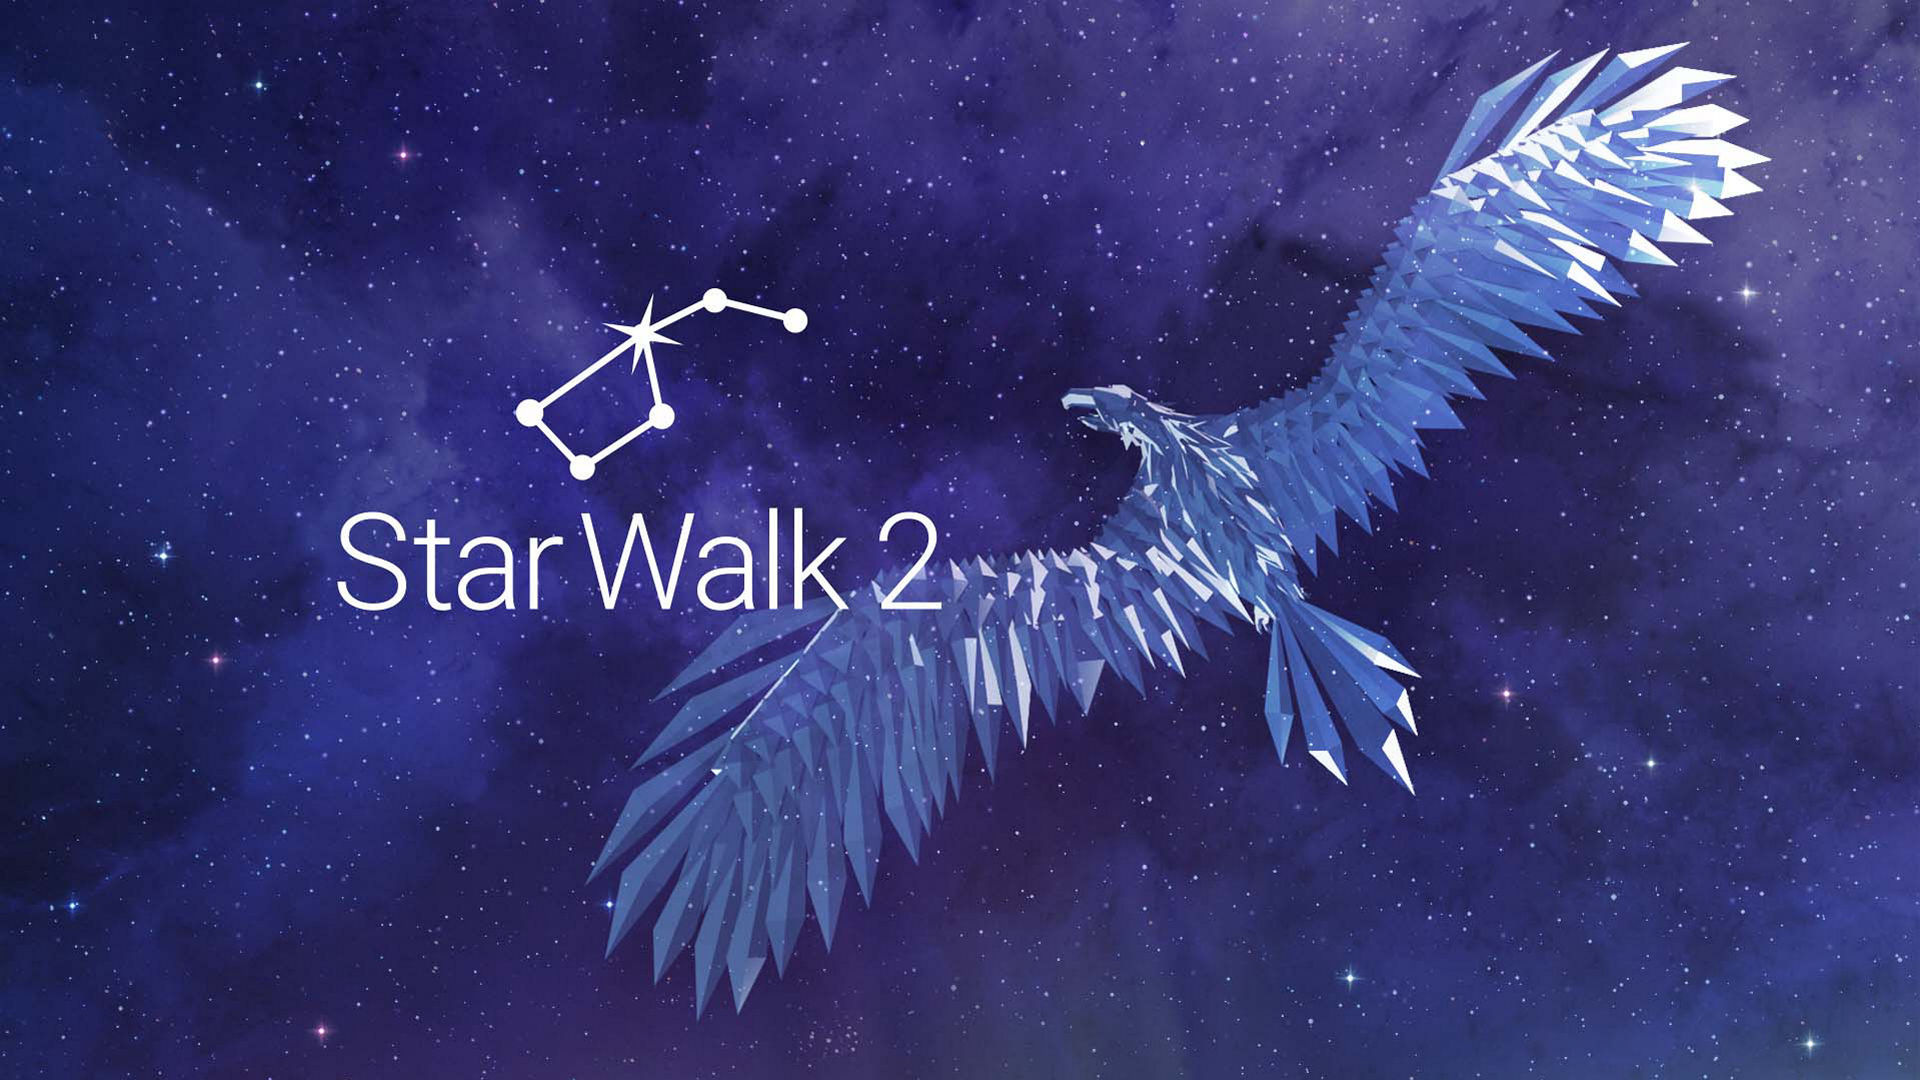 Star Walk 2 with Aquila constellation